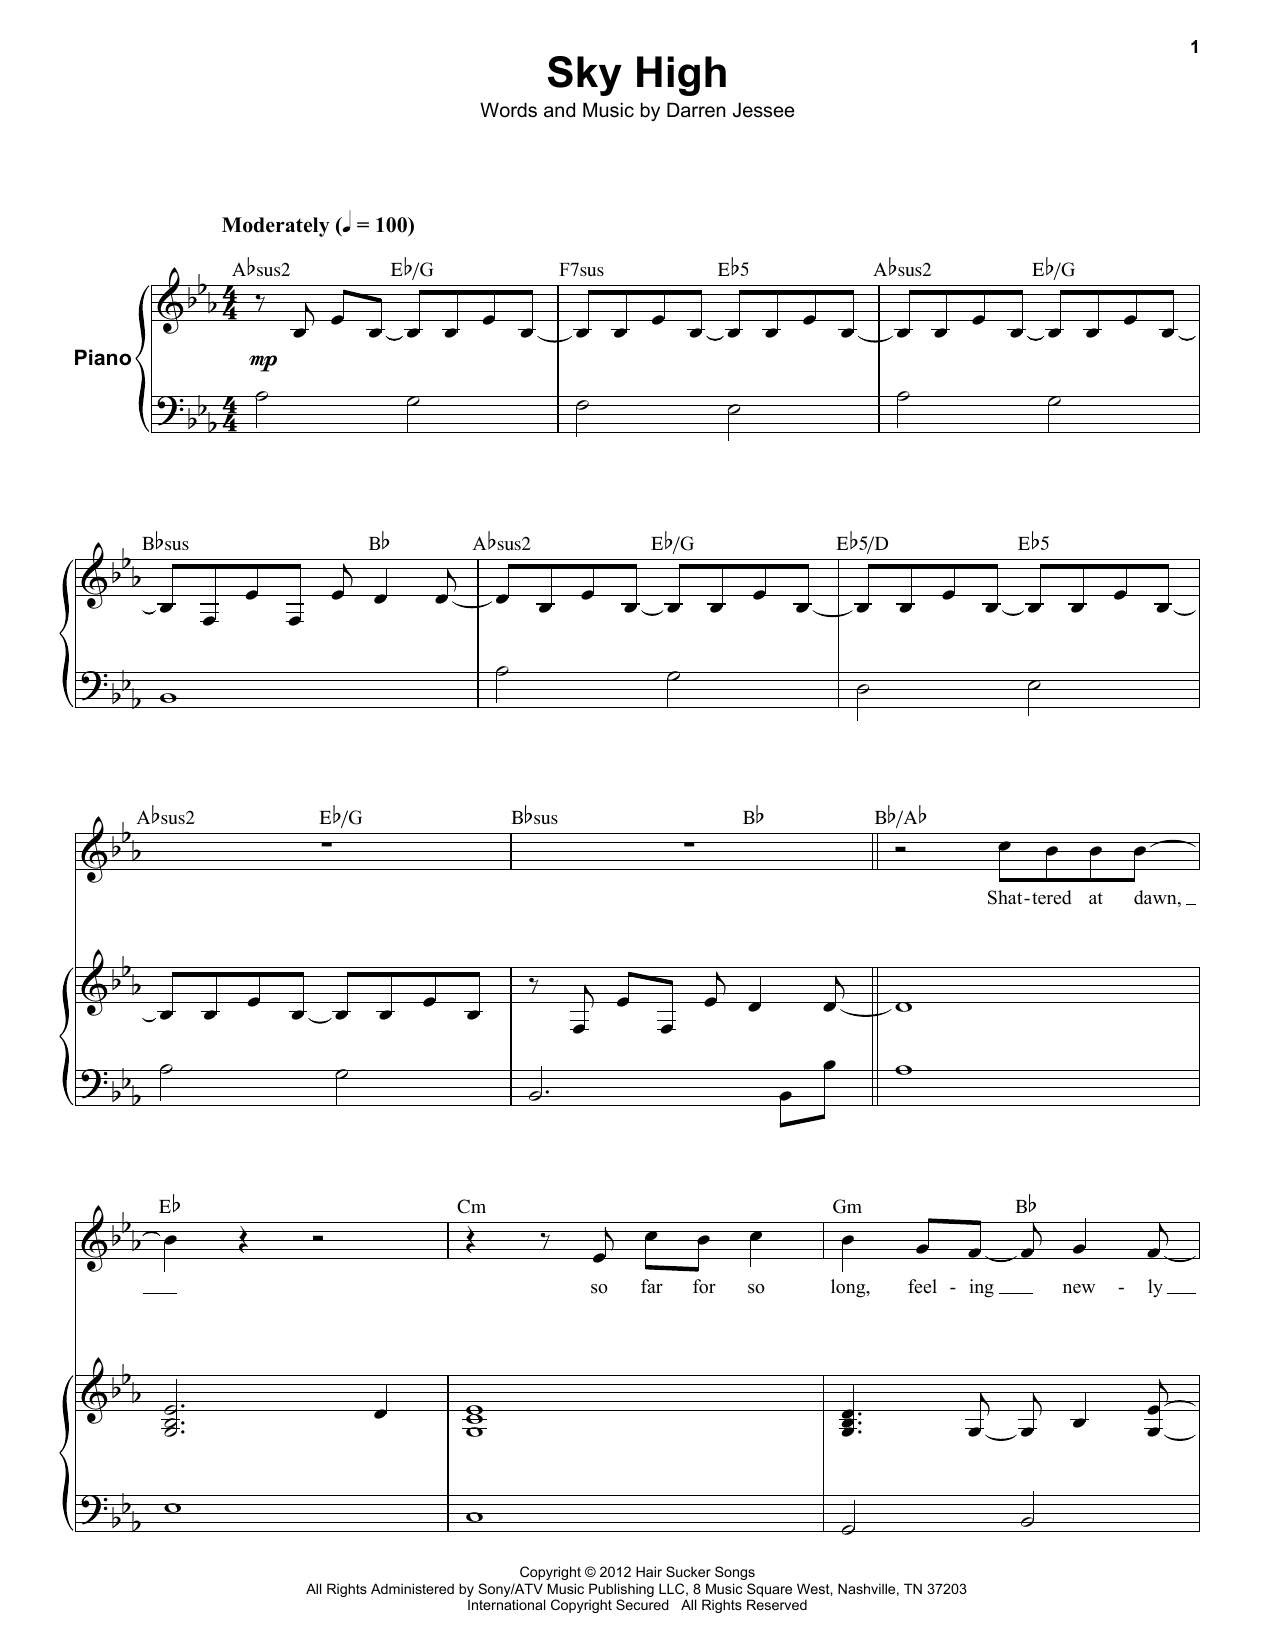 Ben Folds Five Sky High Sheet Music Notes & Chords for Keyboard Transcription - Download or Print PDF